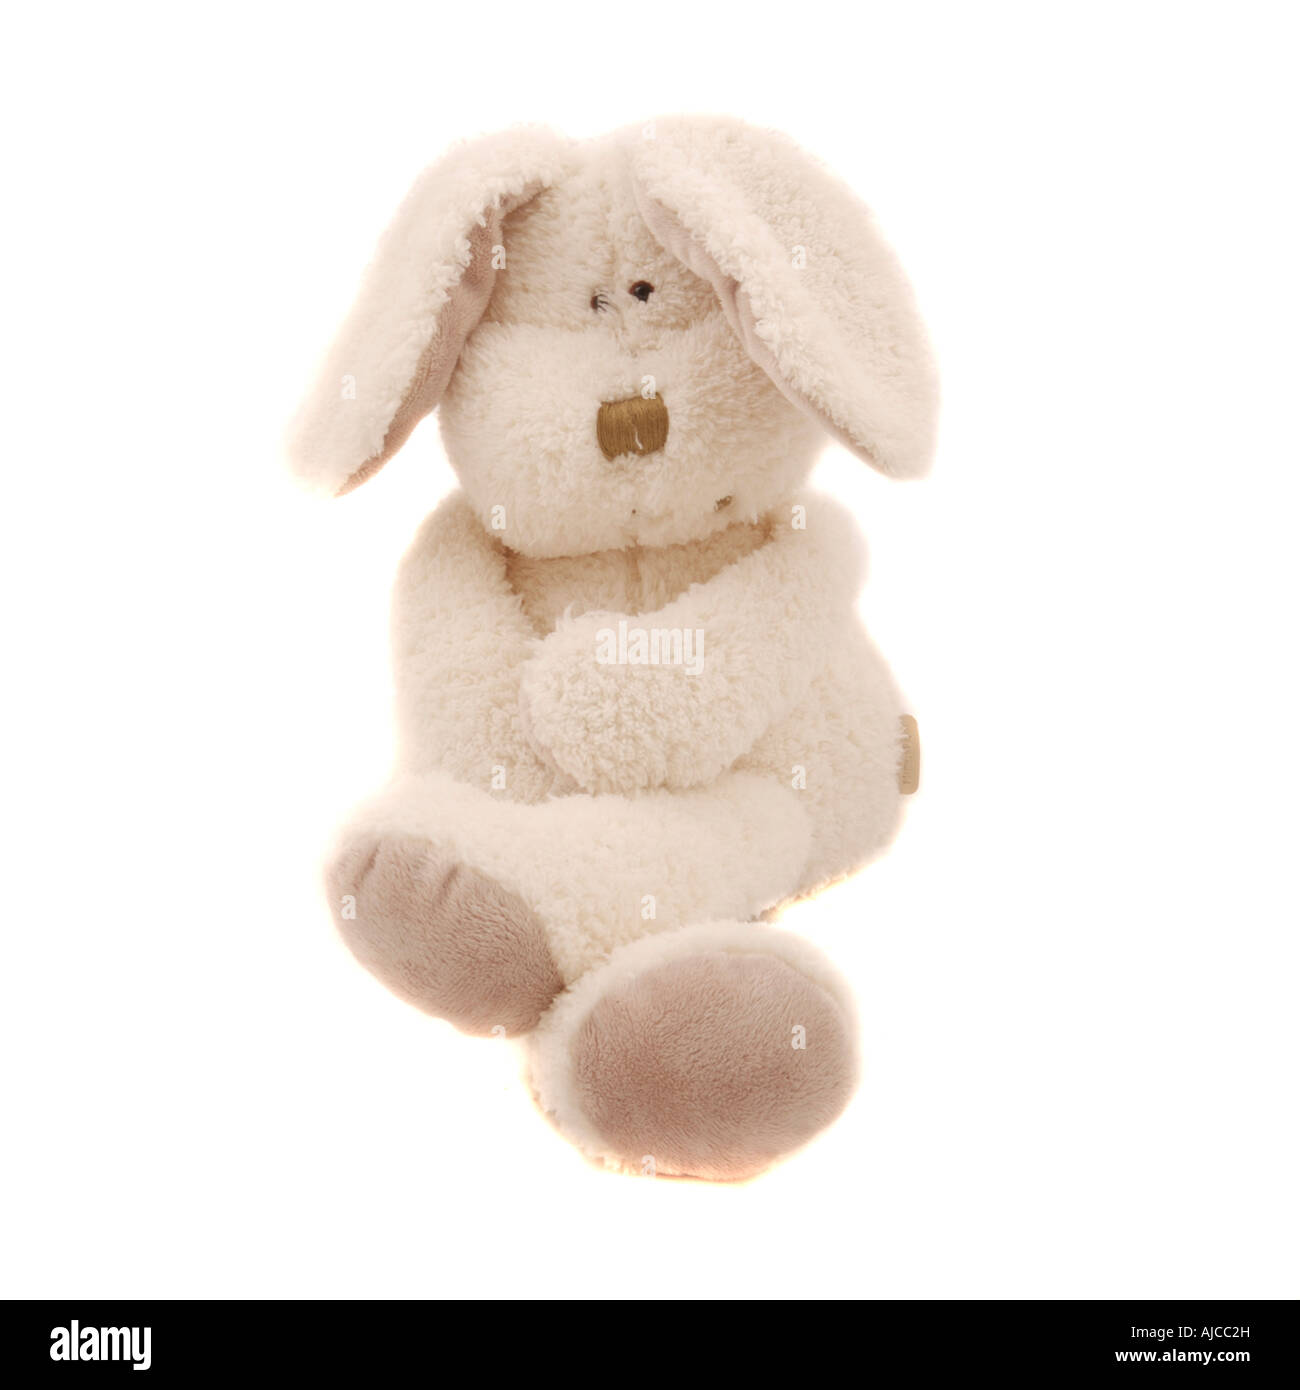 Cuddly stuffed toy shot on a white background Stock Photo